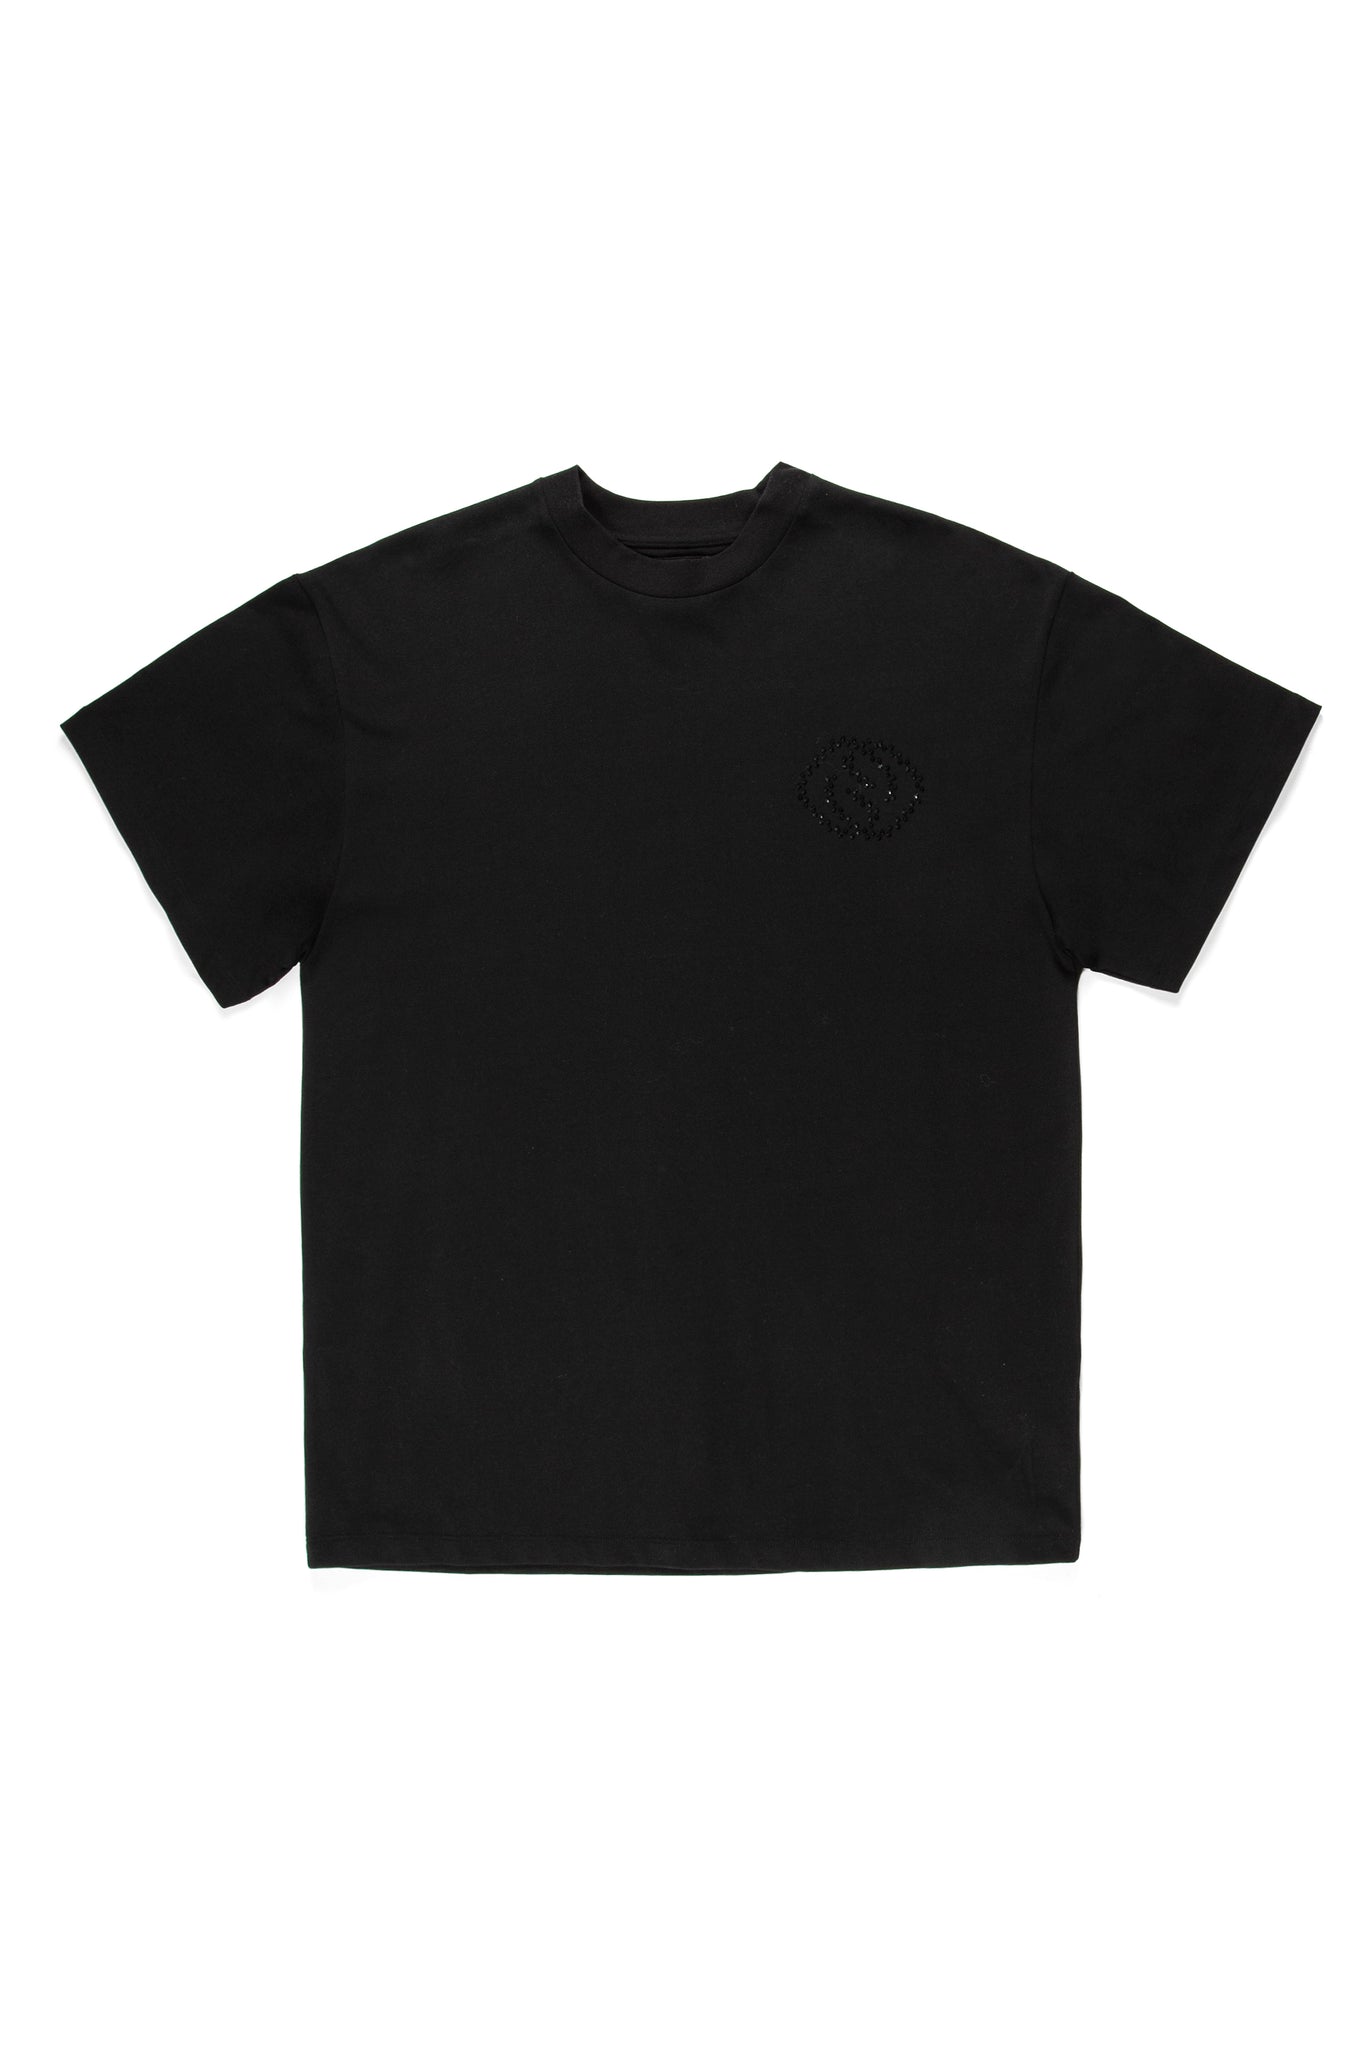 Reginno T-Shirt in Black